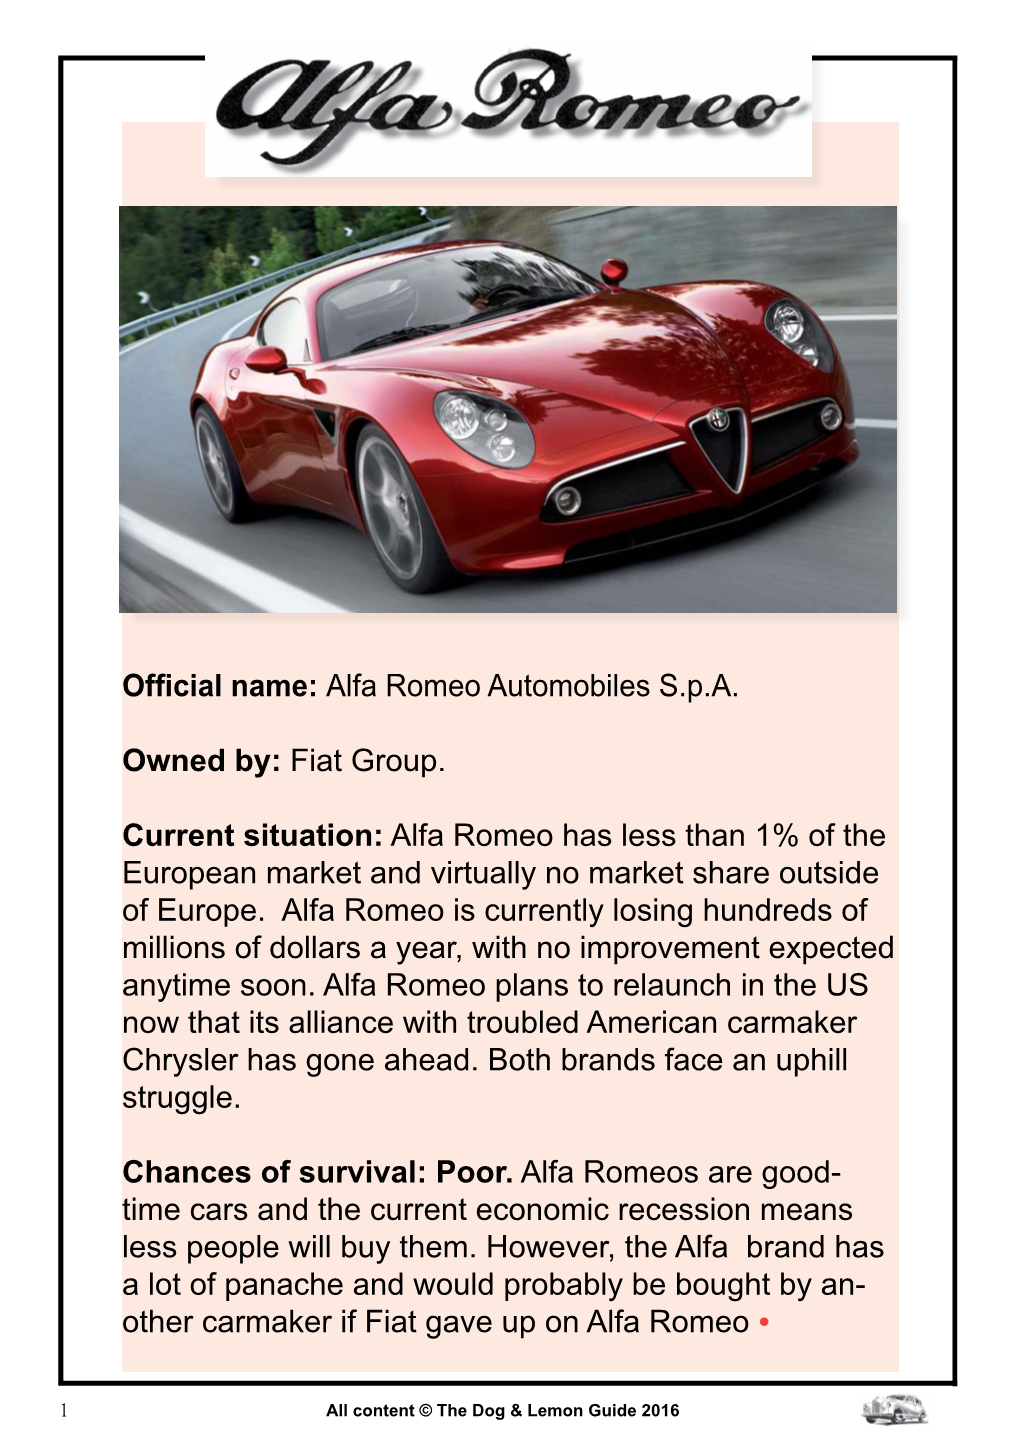 Alfa Romeo Automobiles S.P.A